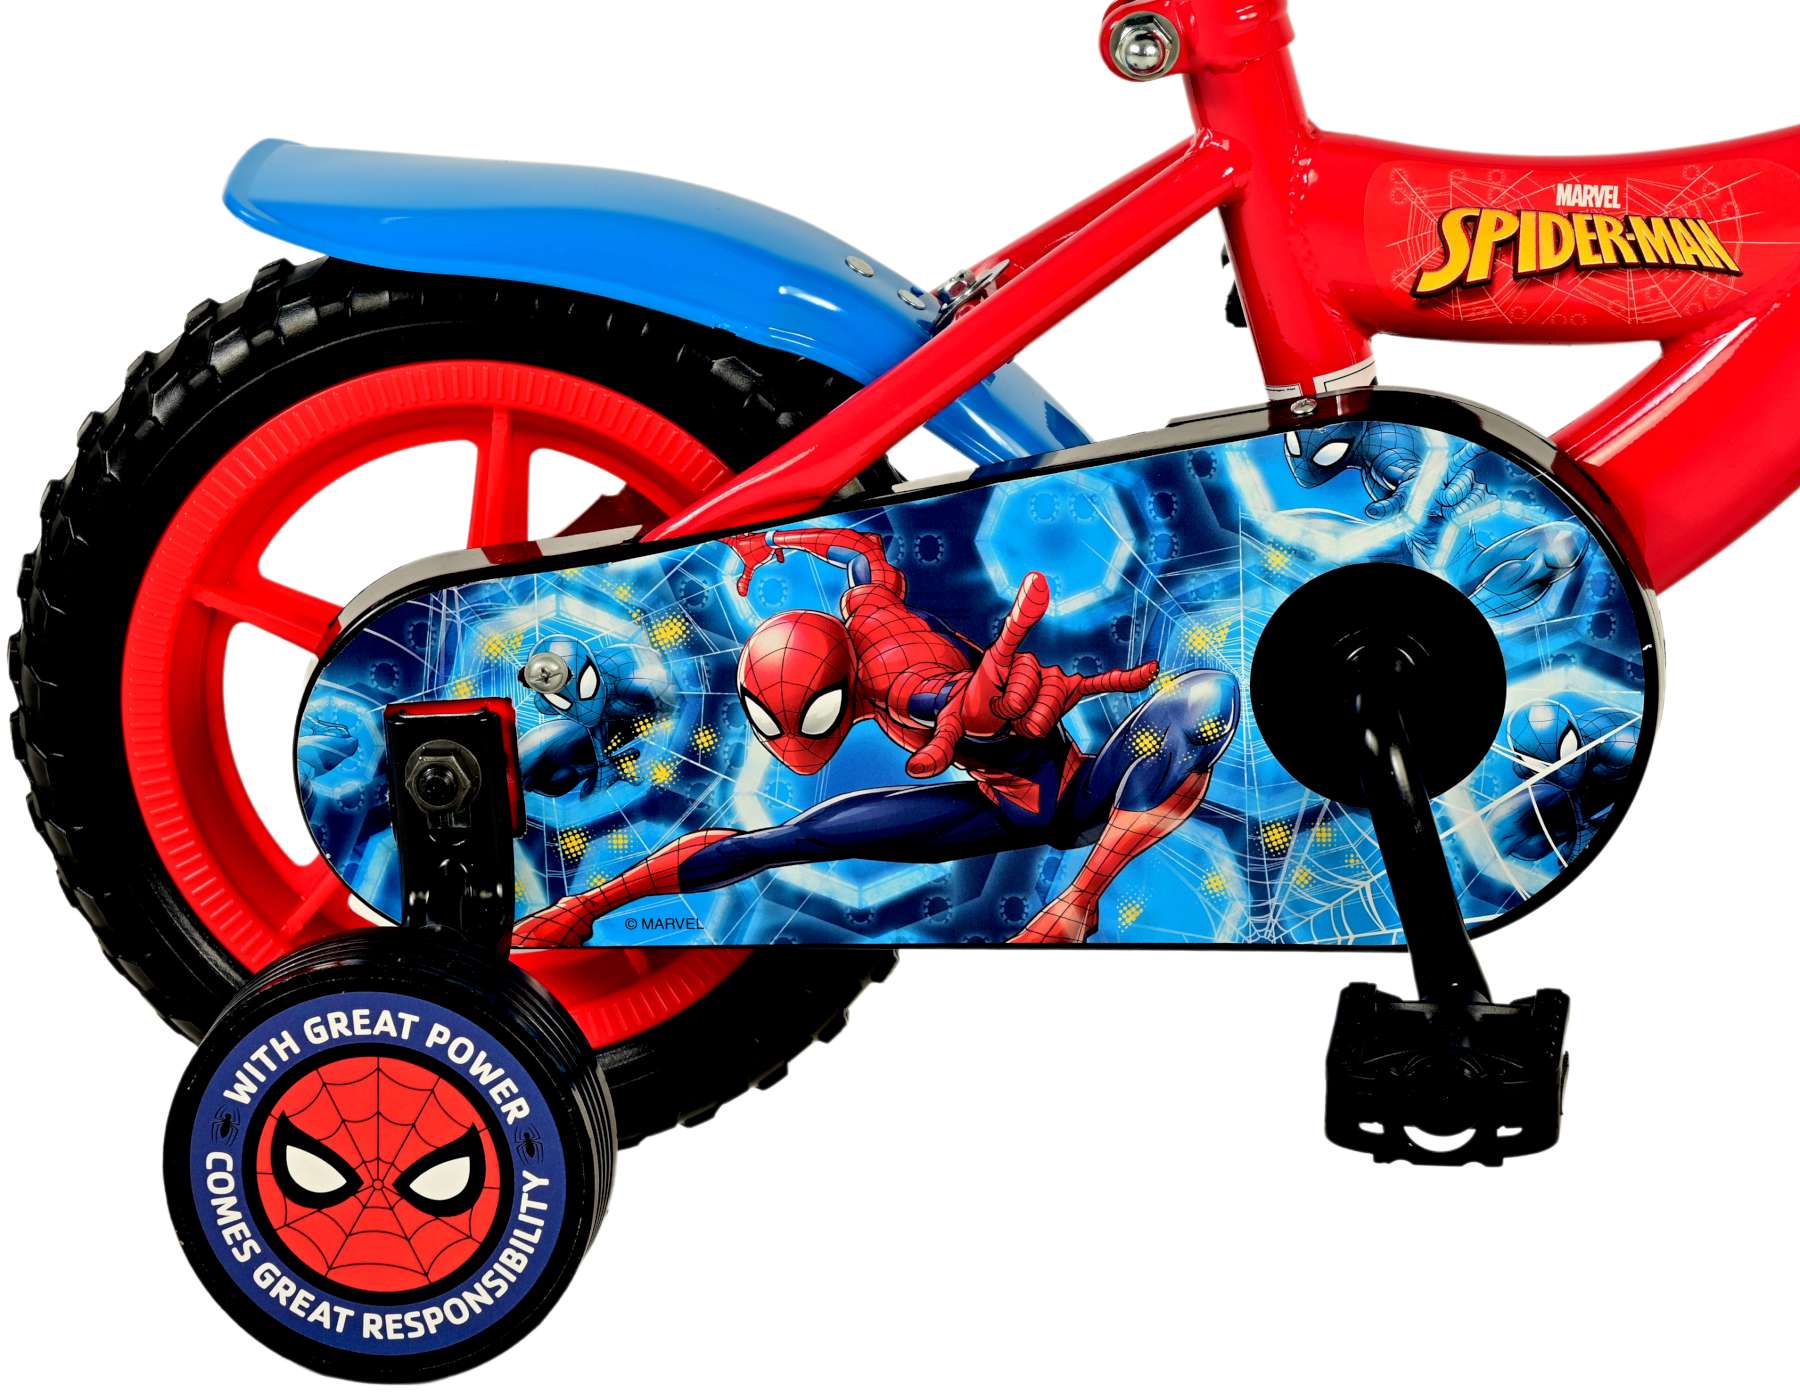 Spiderman_10_inch_-_2-W1800